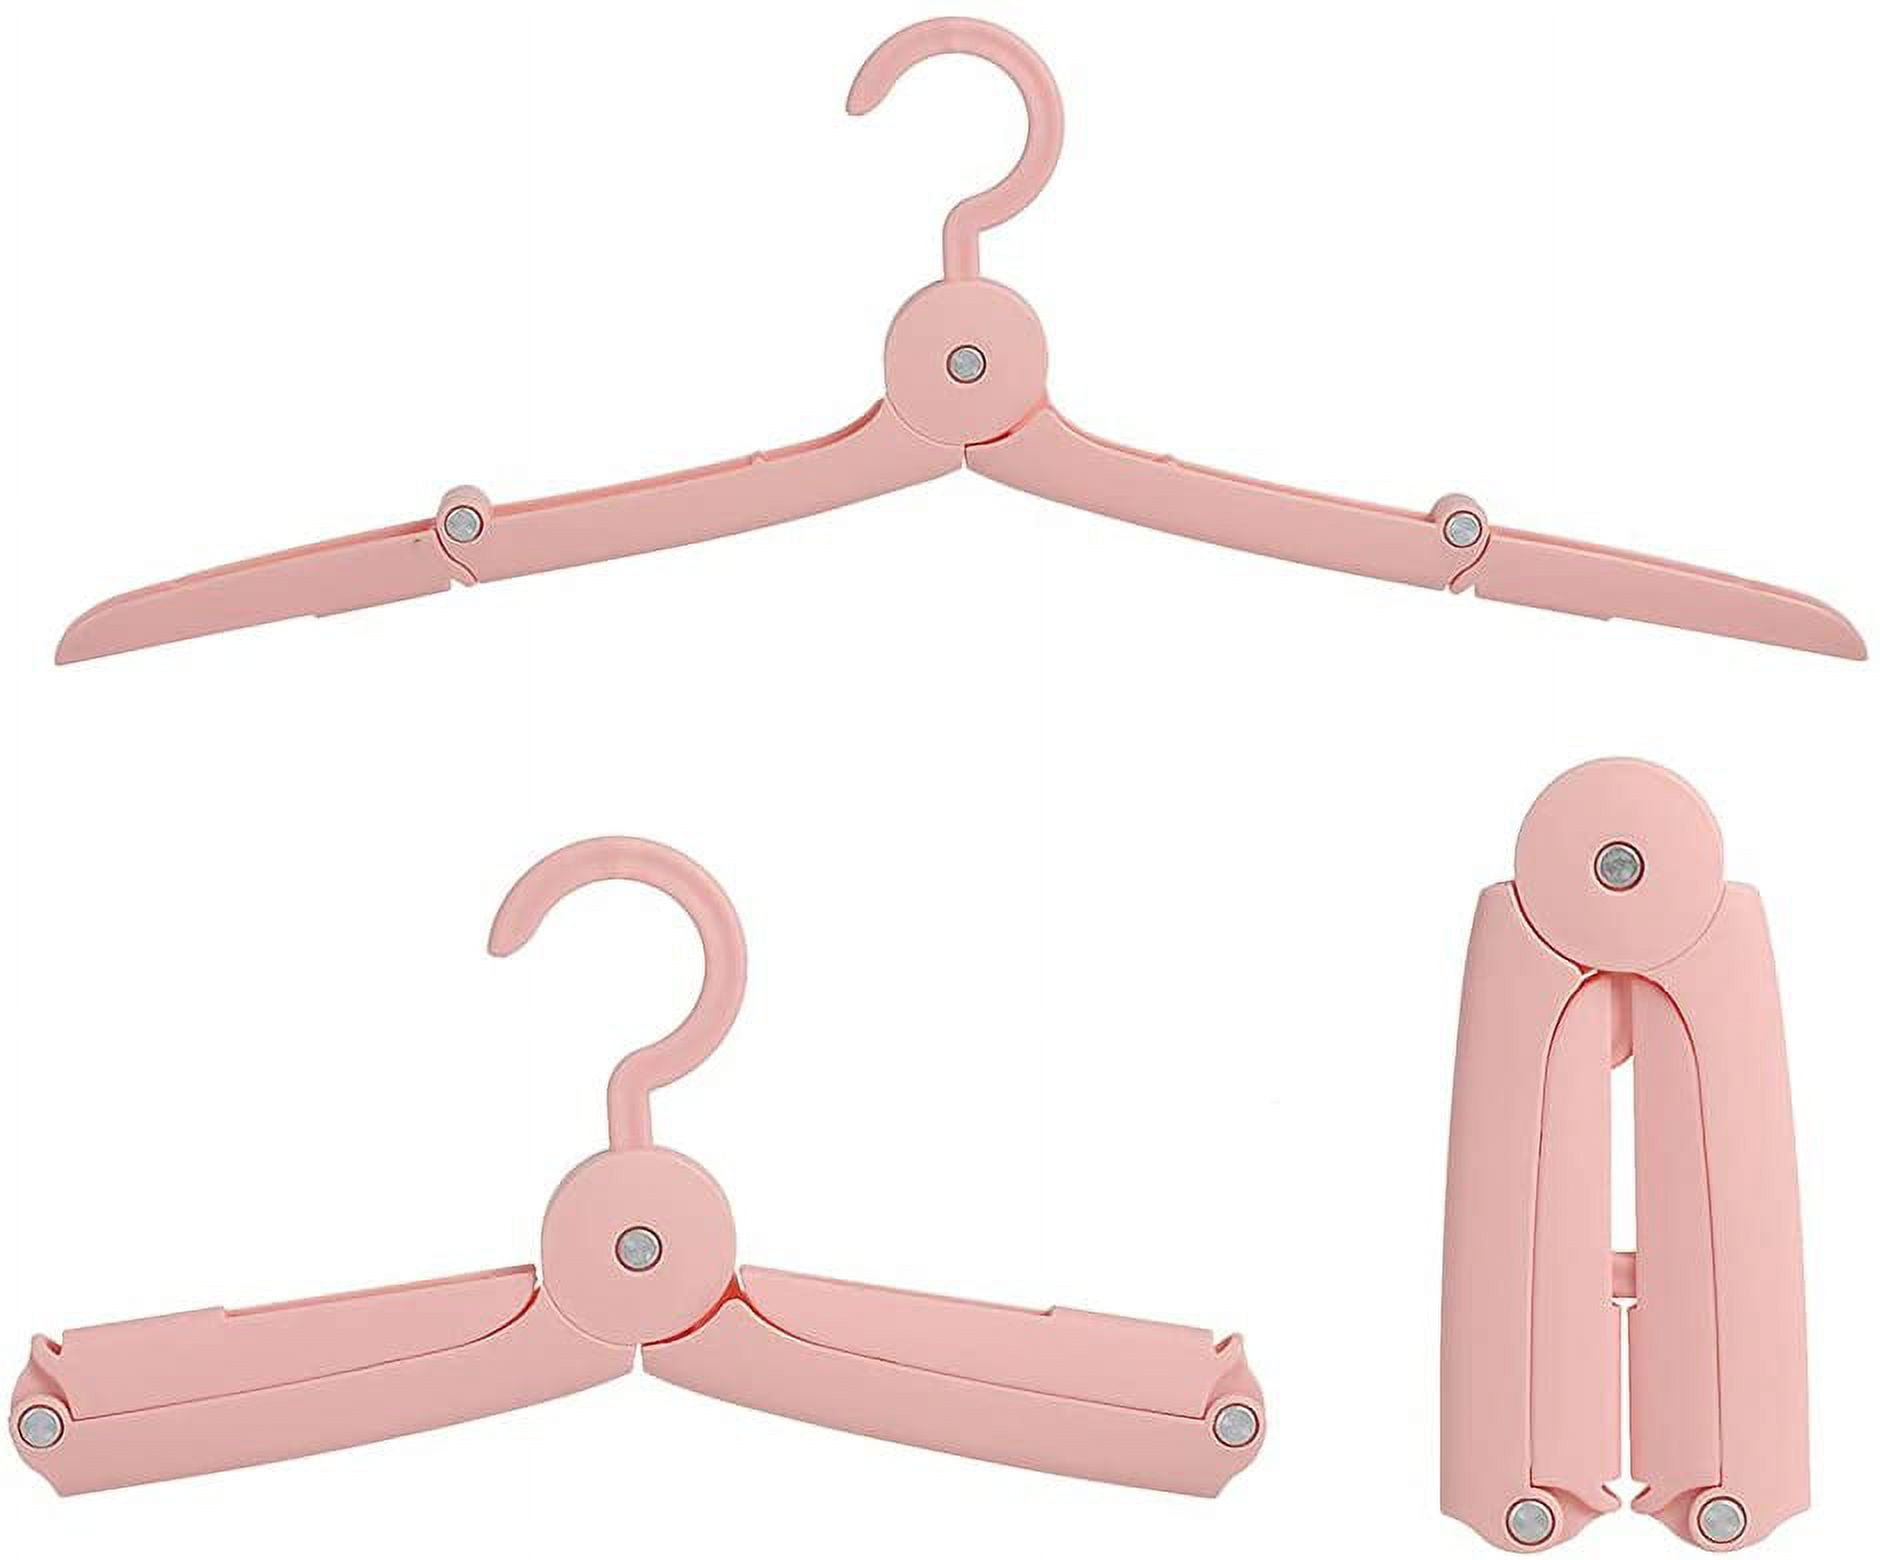 Outdoor Business Portable Plastic Clothes Hook Space Saving Folding Hanger  4pcs - Bed Bath & Beyond - 18366743